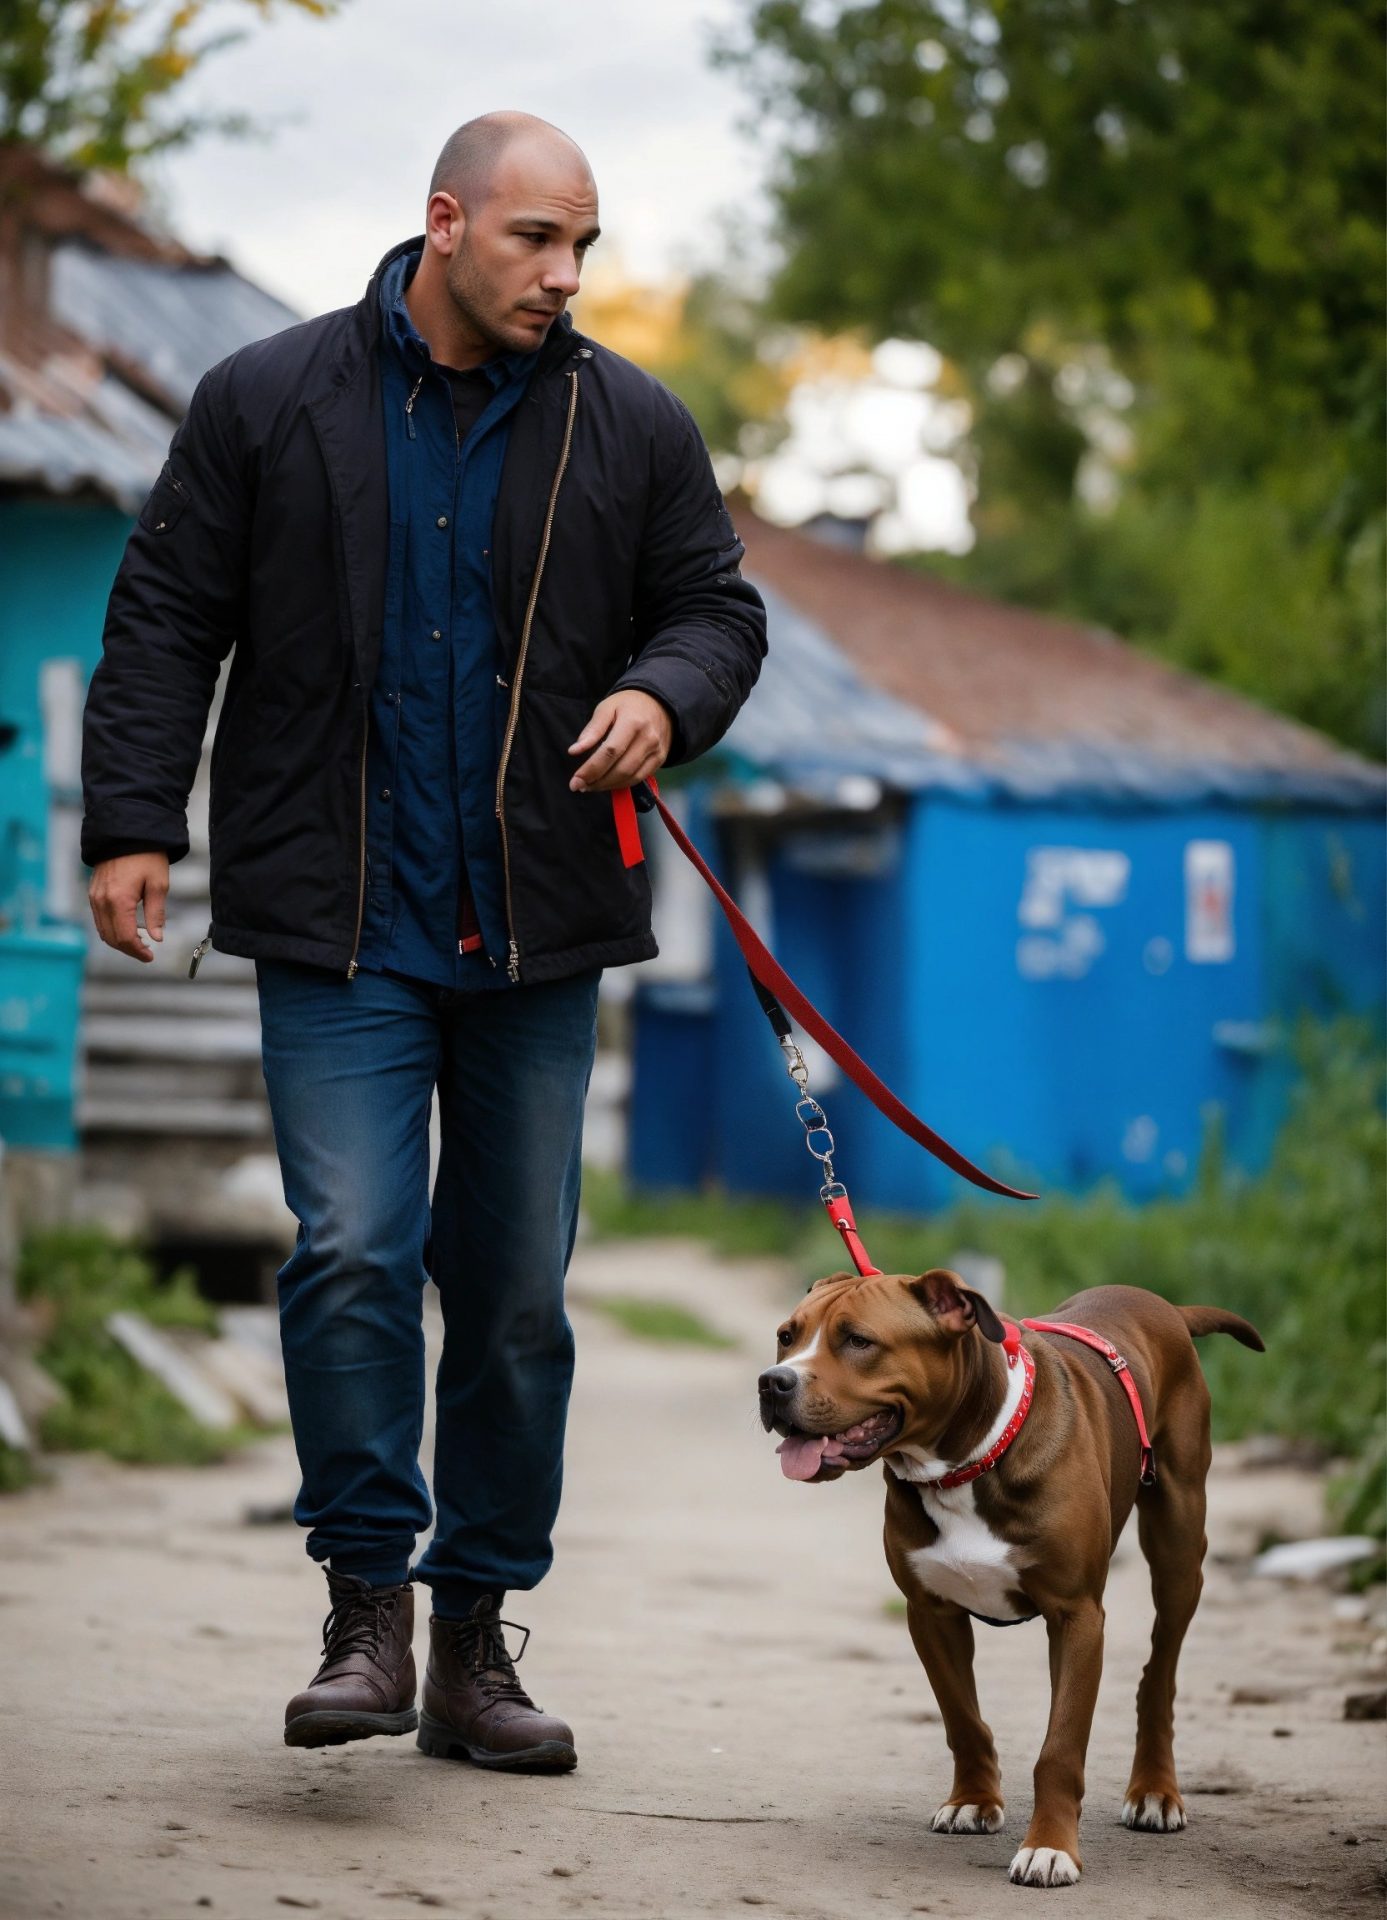 dog enjoys walking with owner